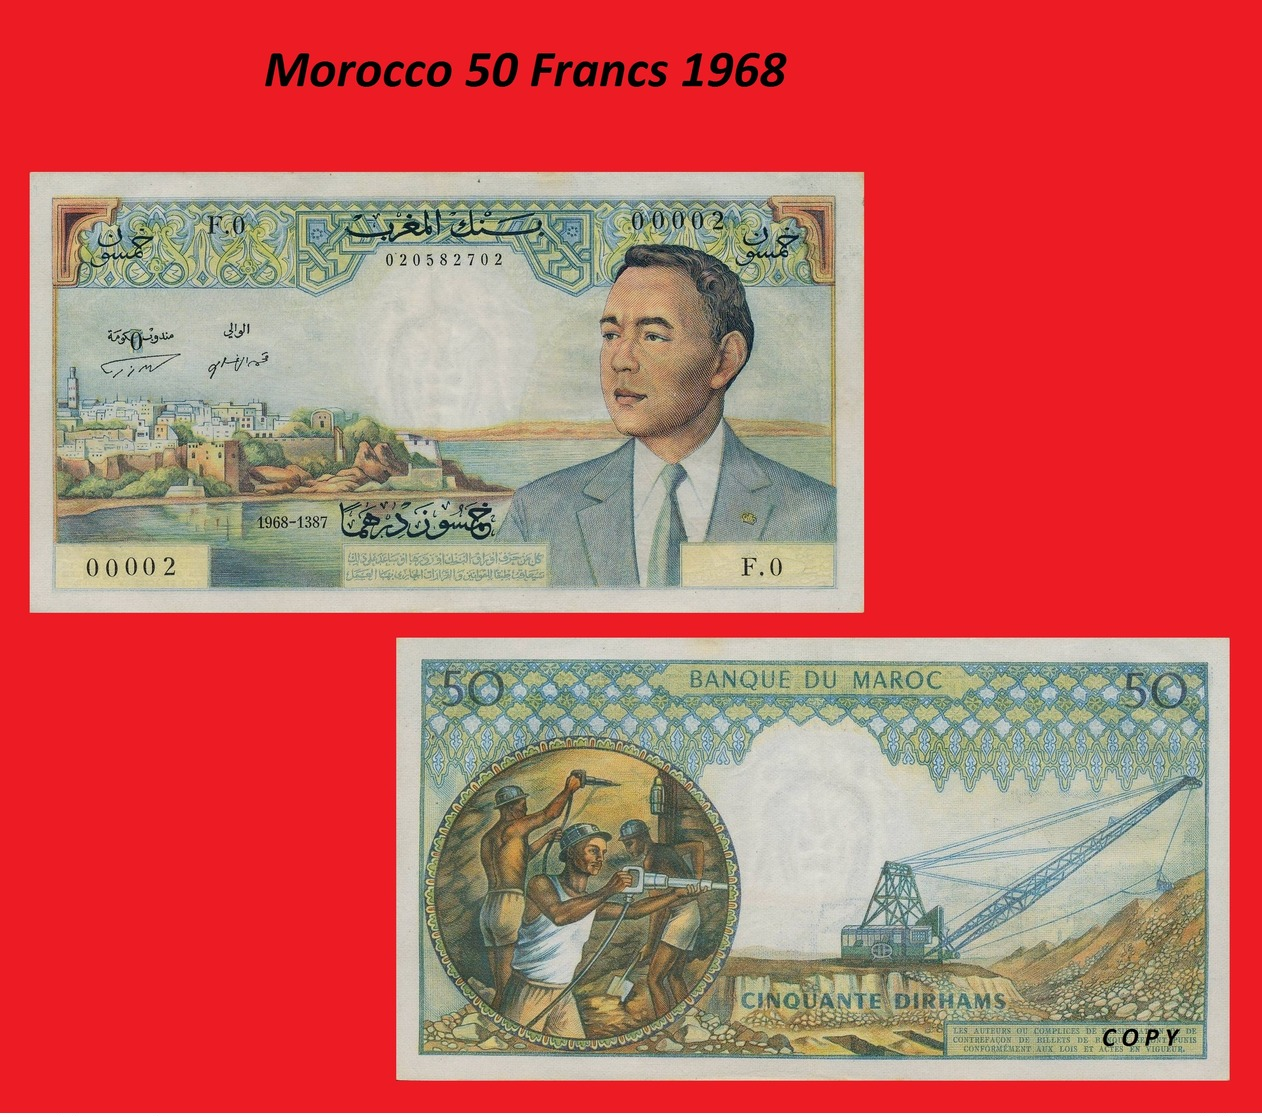 Morocco 50 Francs 1968 - Marocco